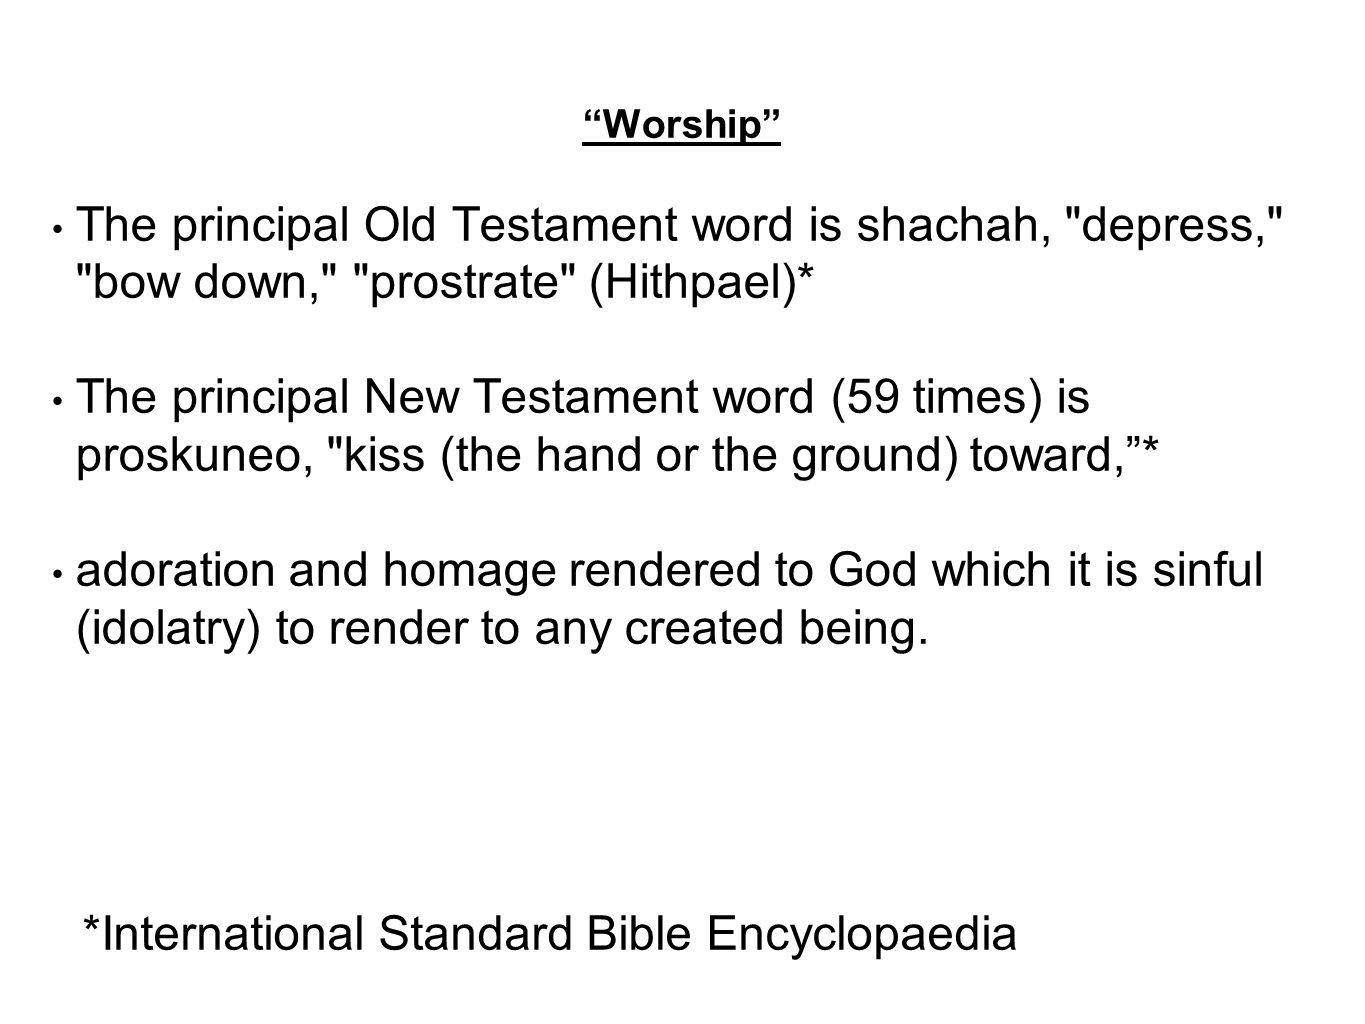 *International Standard Bible Encyclopaedia